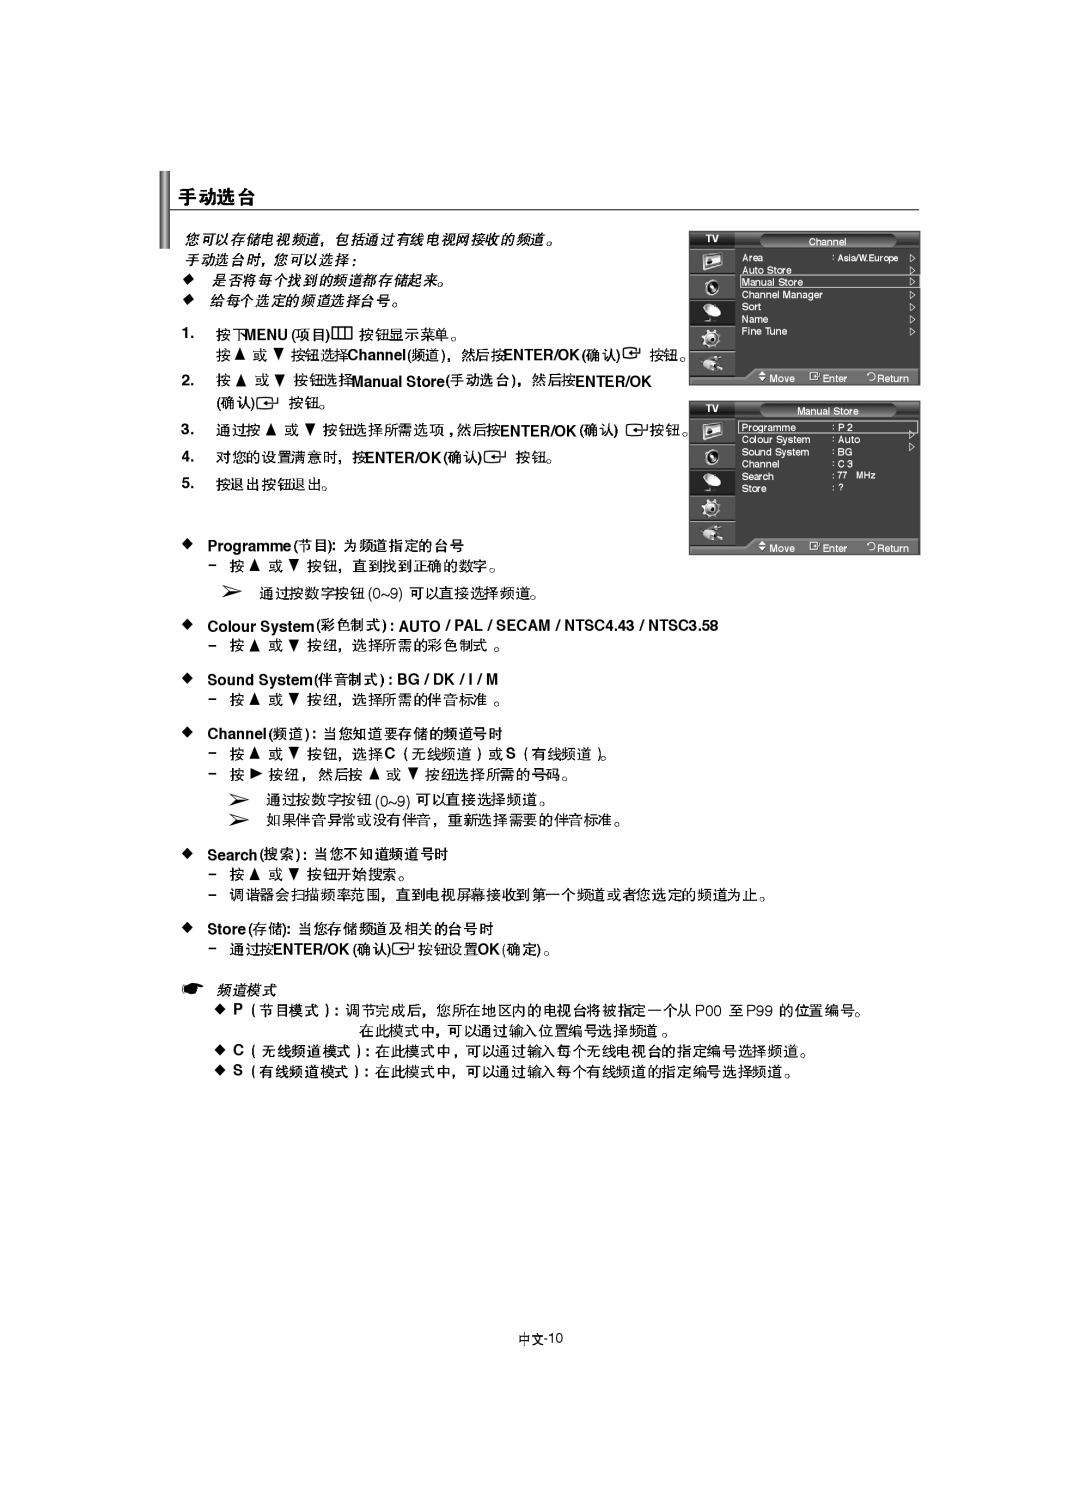 Samsung LA52F8, LA46F8, LA40F8 manual MENU   ChannelENTER/OK 